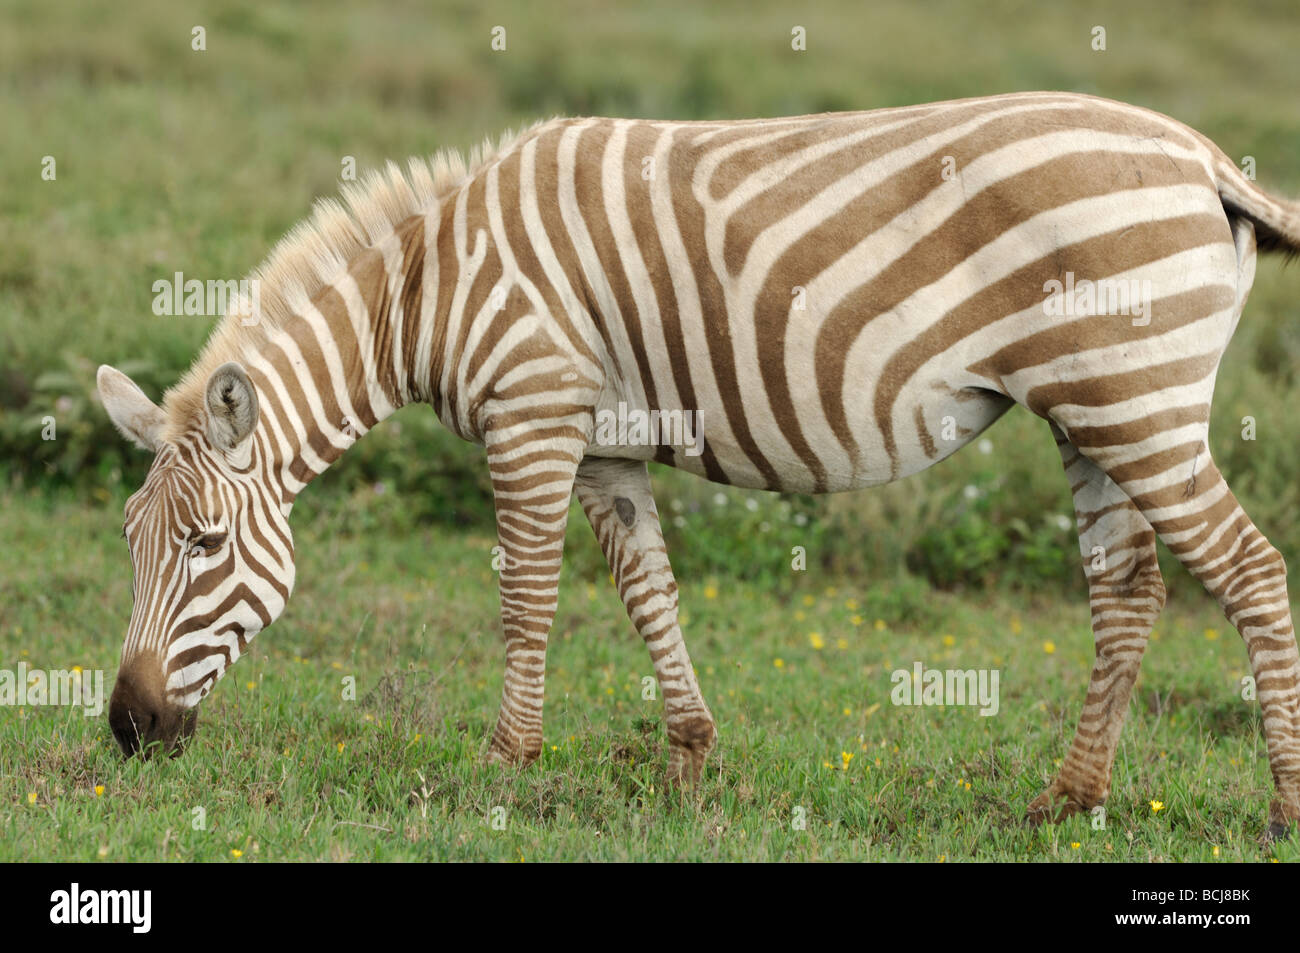 Stock photo of a light color phase zebra grazing, Ndutu, Tanzania, February 2009. Stock Photo